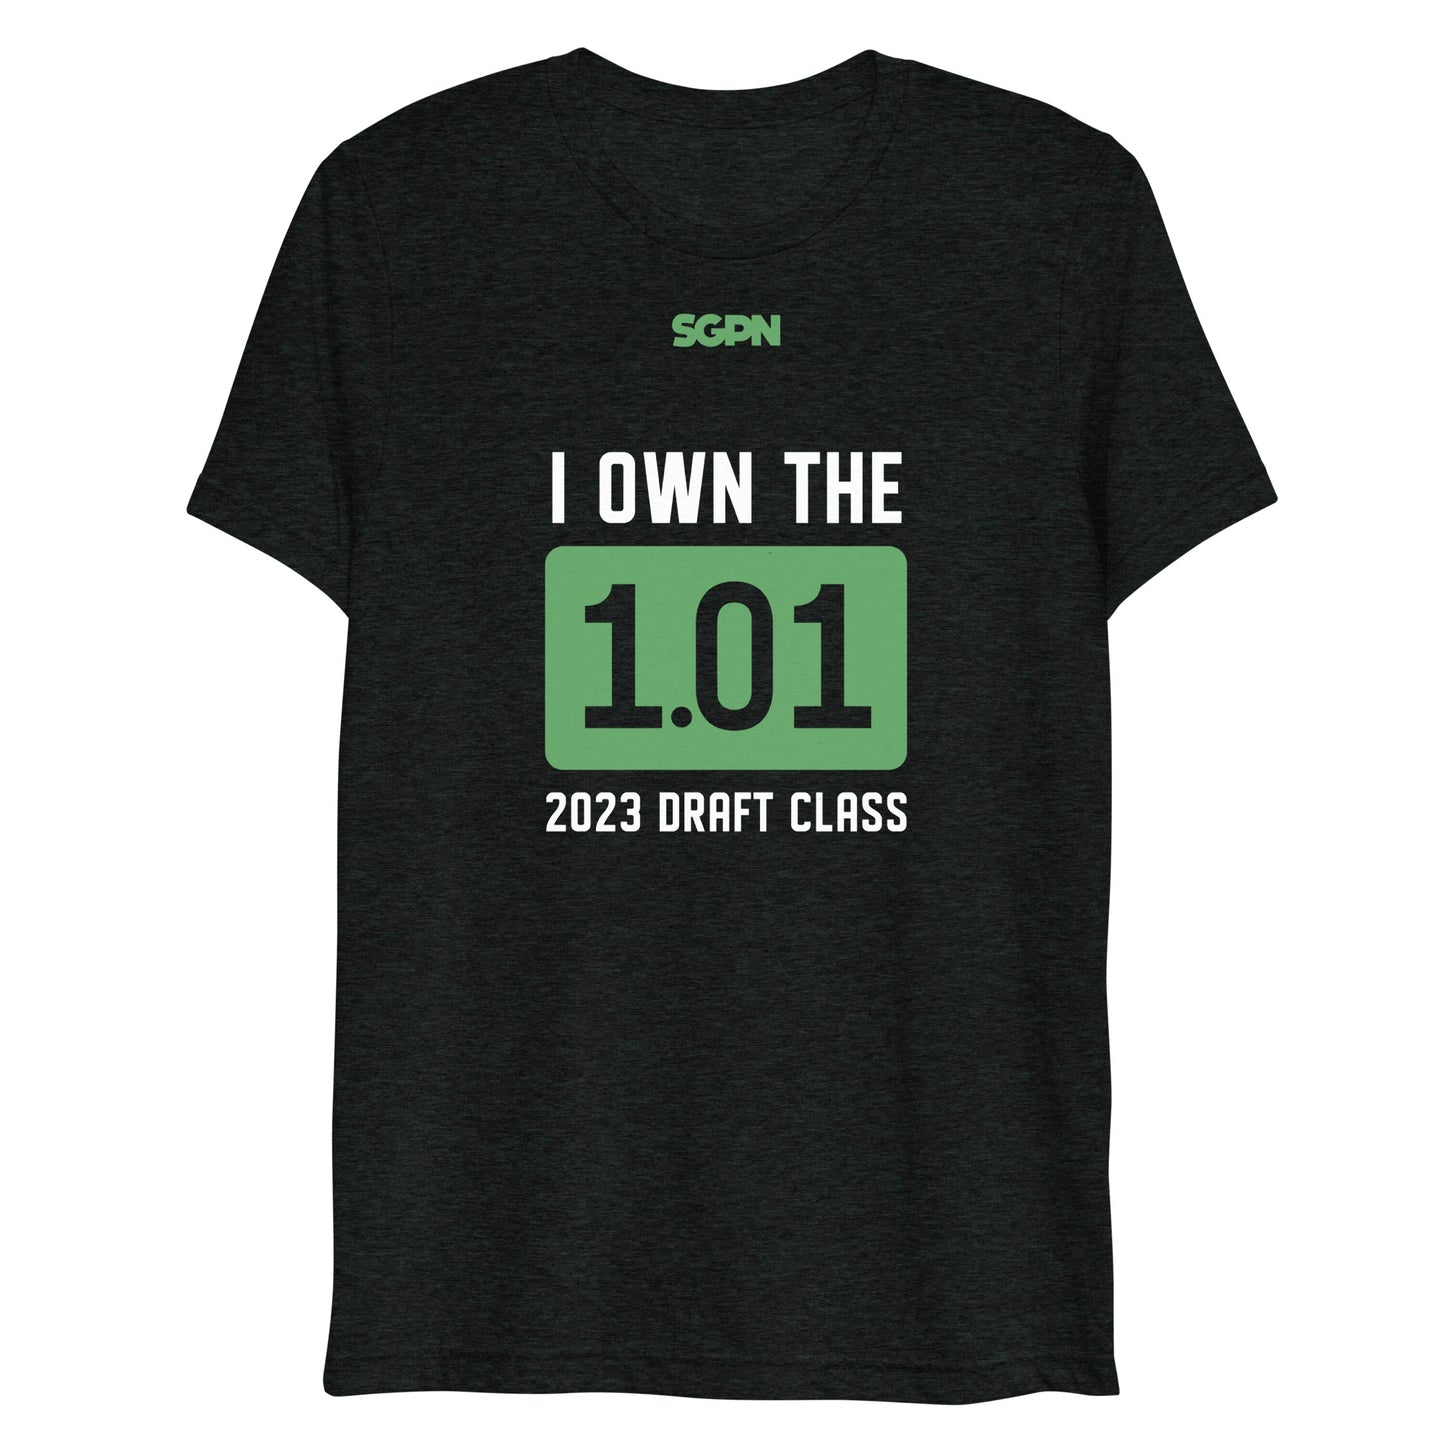 I own the 1.01 - Fantasy Football Podcast- Short sleeve t-shirt (Green)